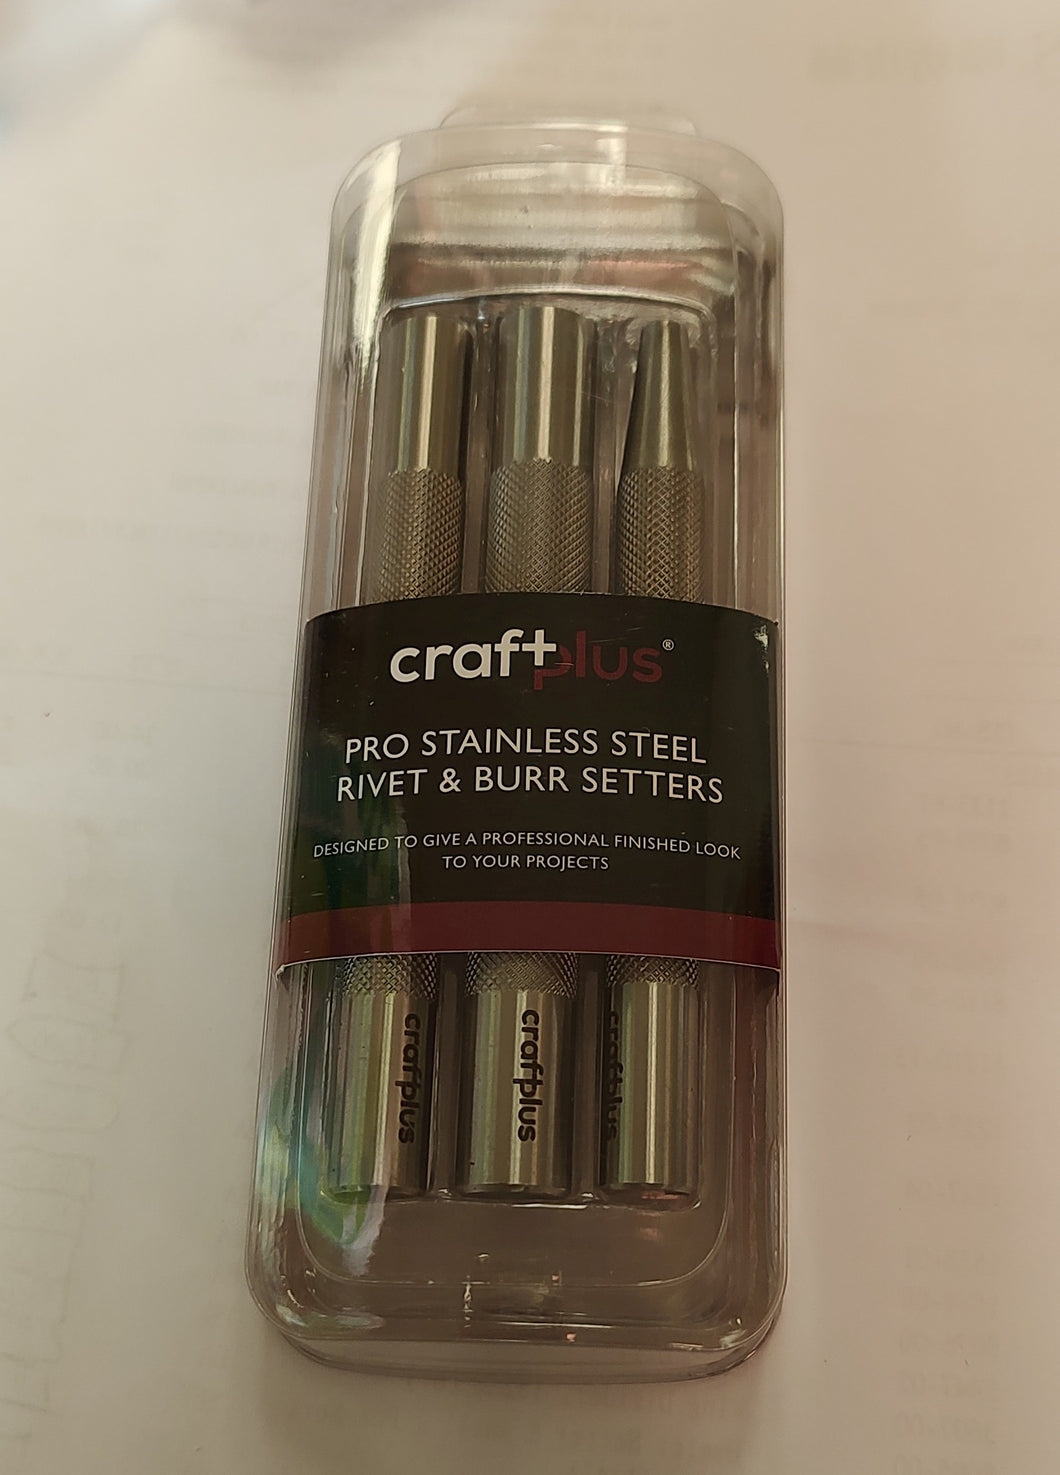 Craftplus Pro Stainless Steel Rivet & Burr Setters